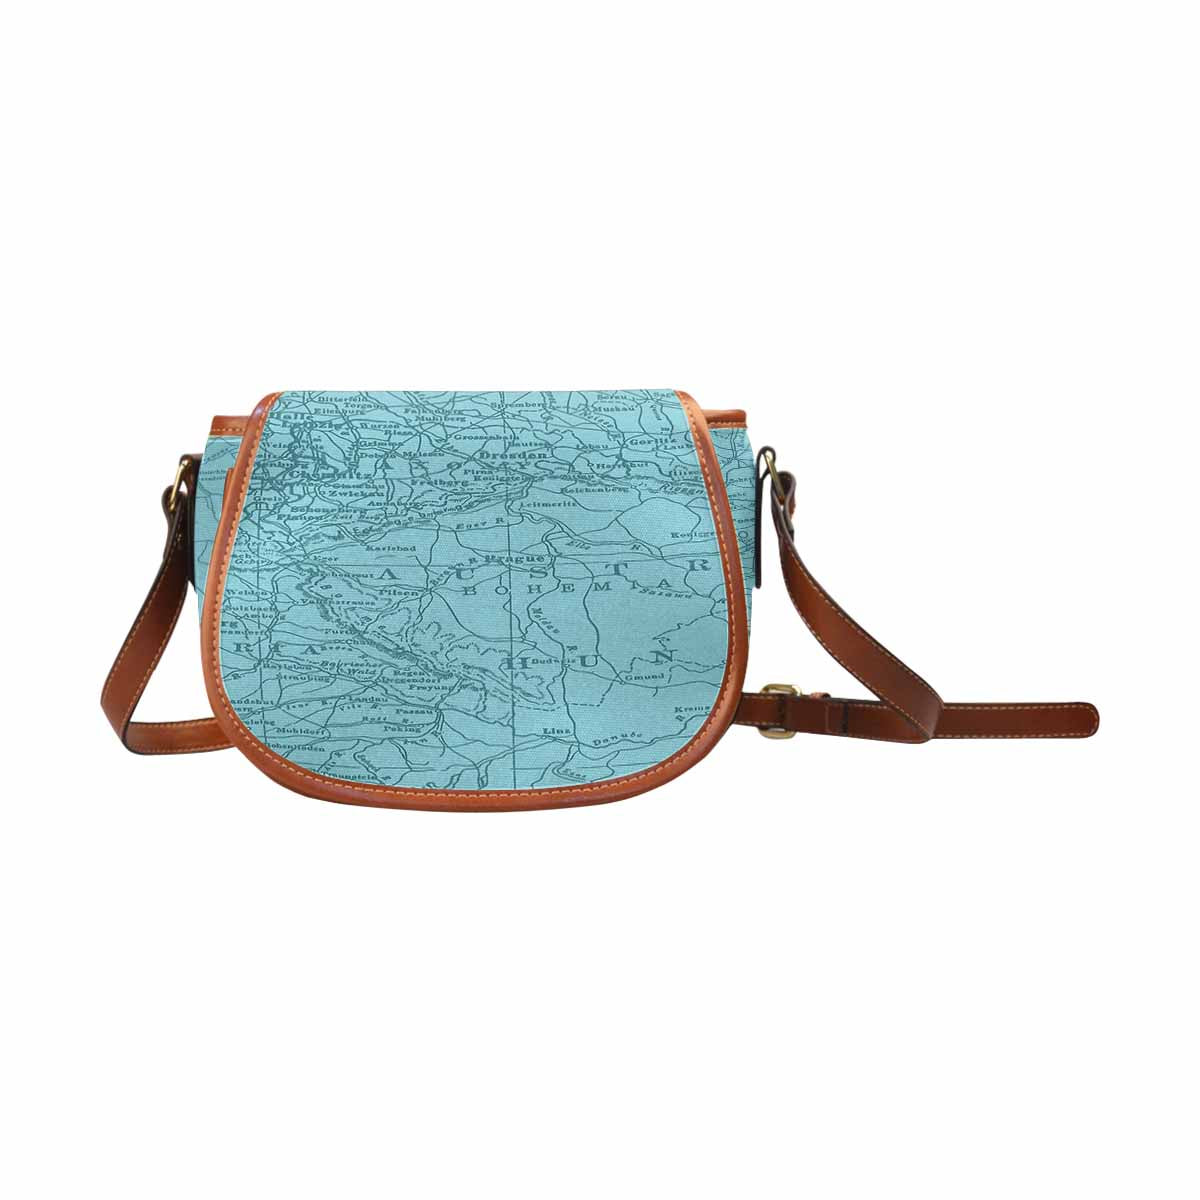 Antique Map design Handbag, saddle bag, Design 55